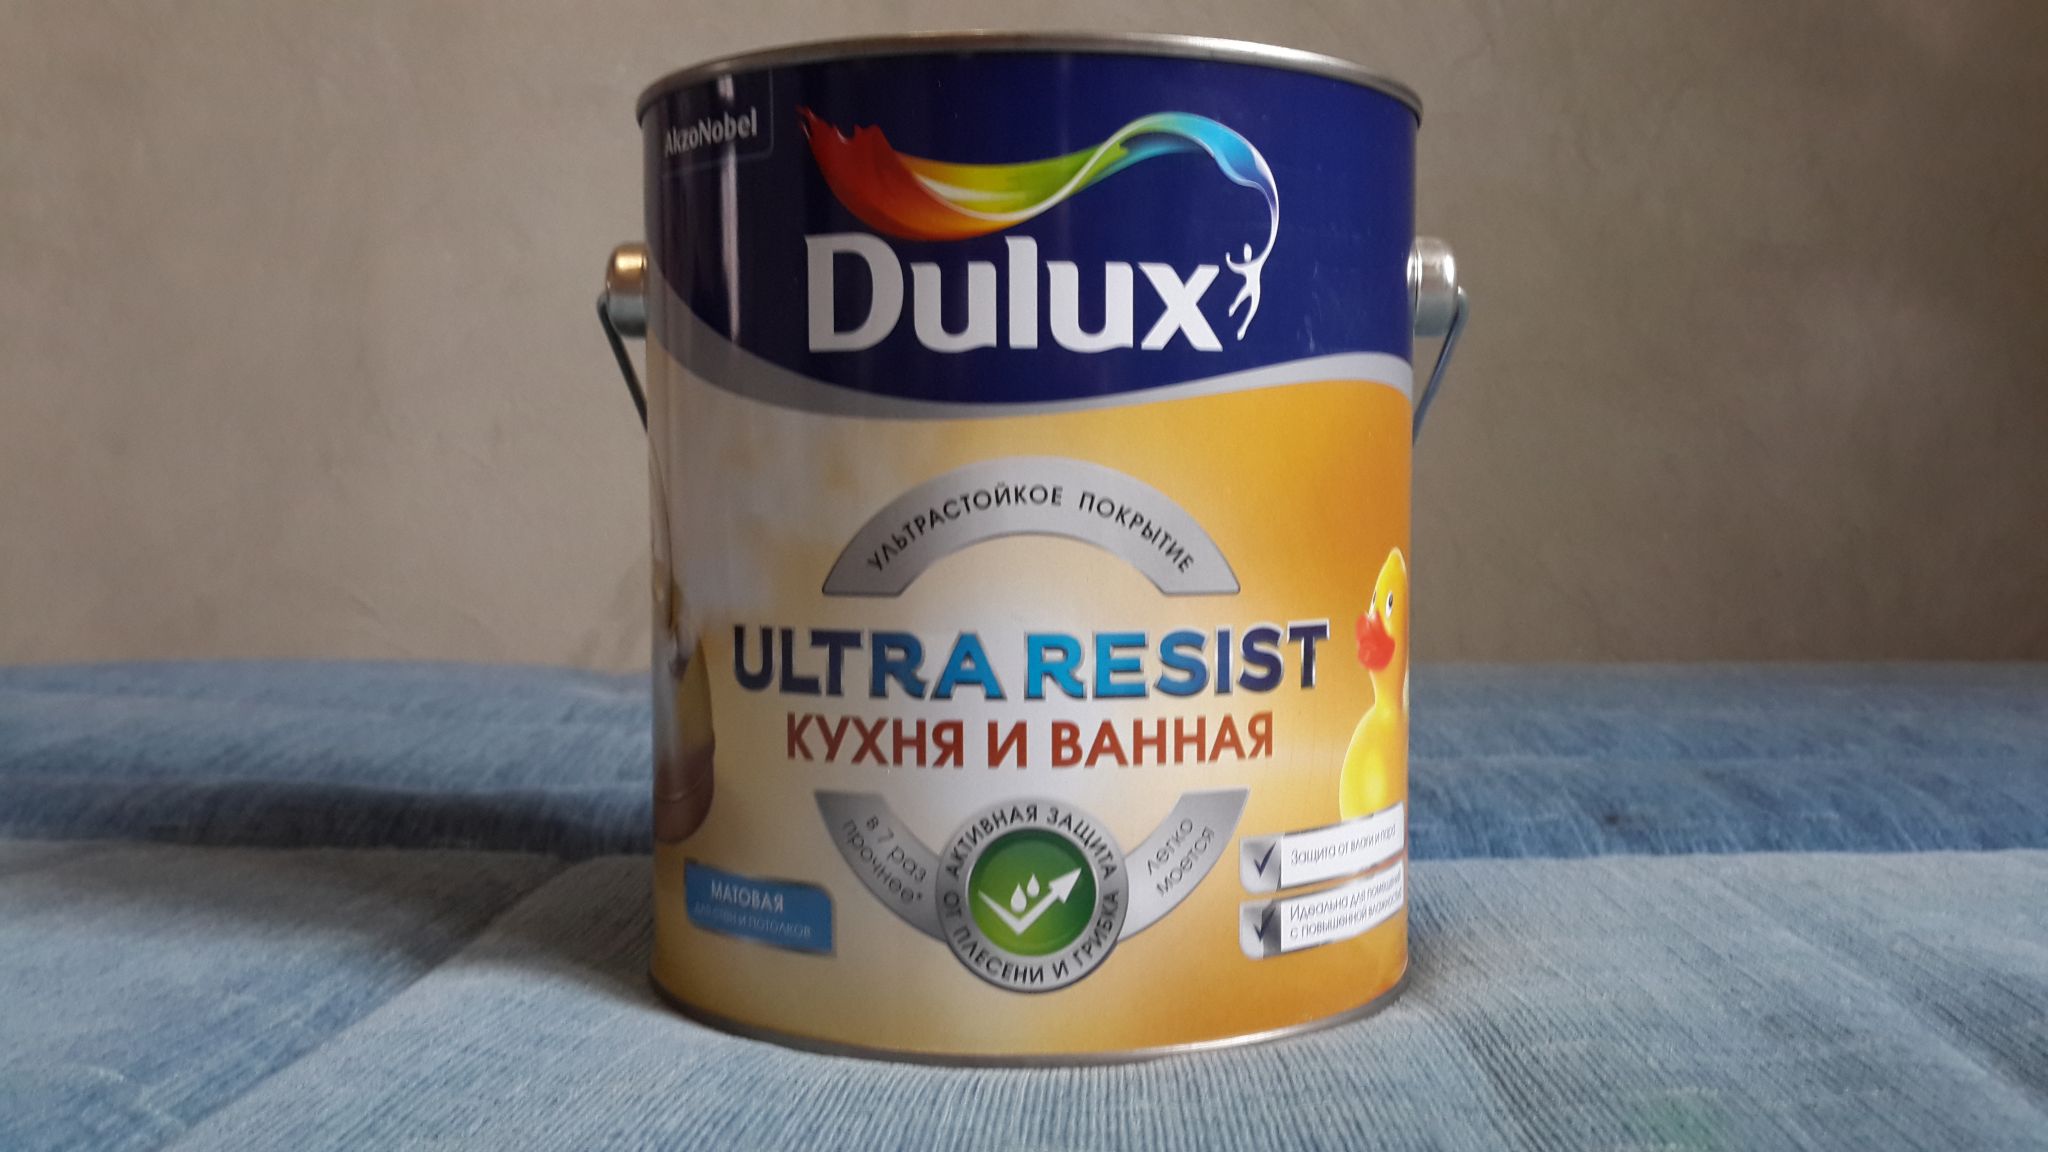 Ультра резист. Dulux ультра резист. Dulux Ultra resist кухня и ванная. Краска Dulux Ultra. Dulux Ultra resist кухня и ванная матовая BW 5.